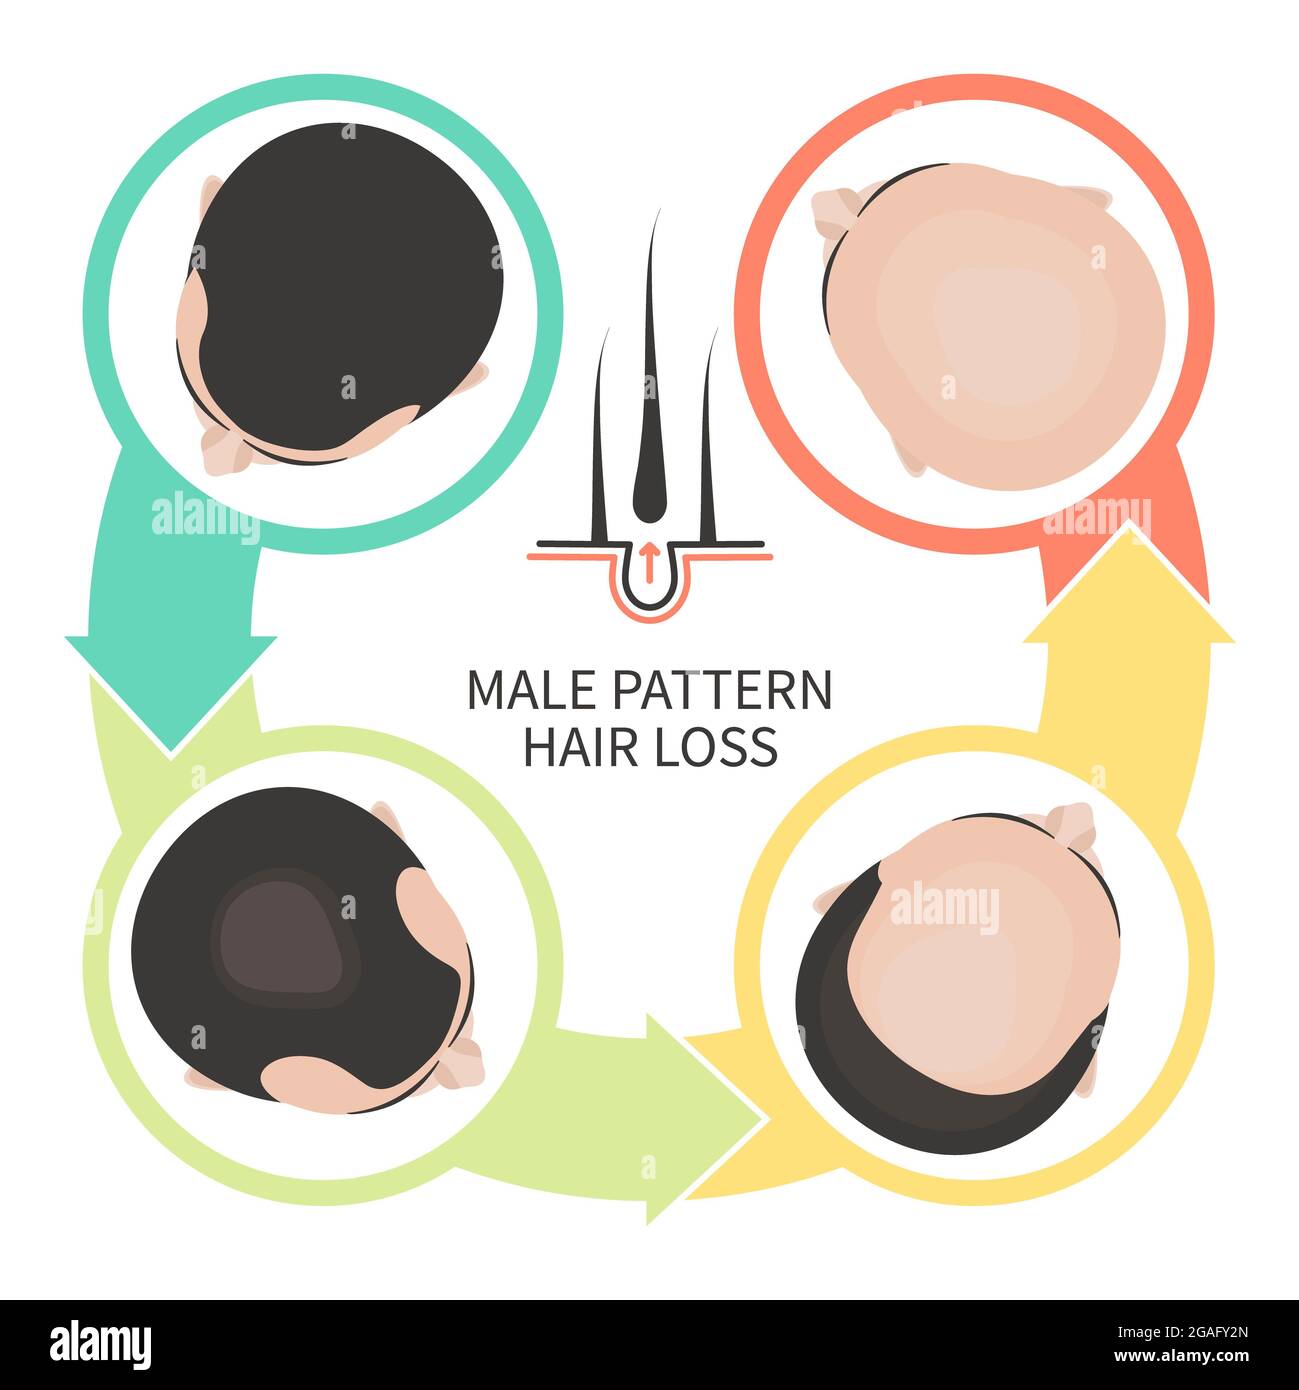 Male pattern hair loss, illustration Stock Photo